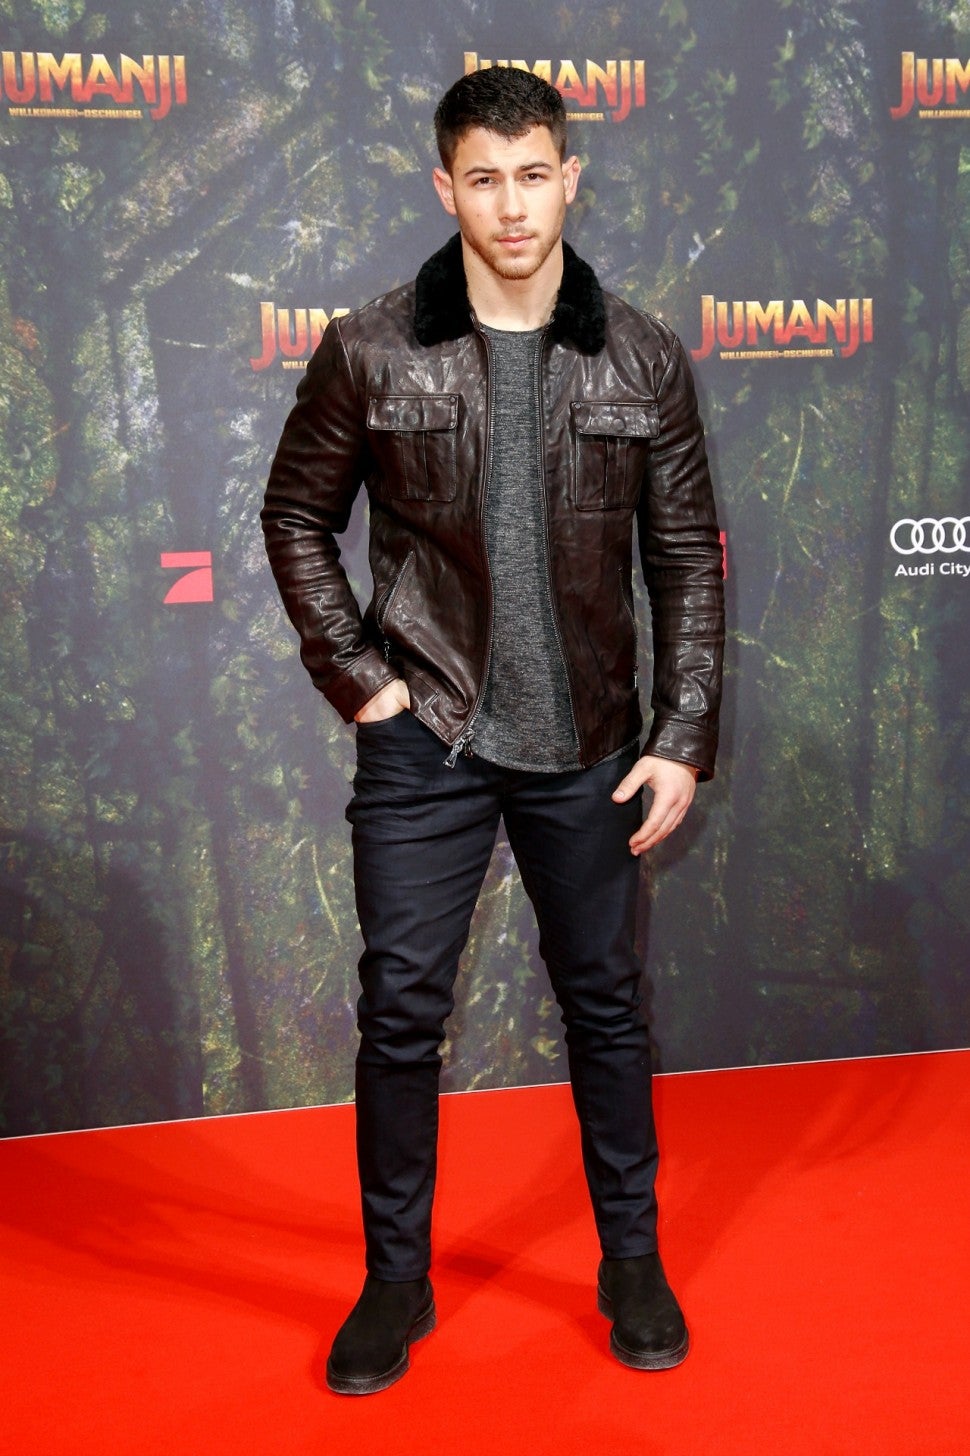 Nick Jonas Jumanji berlin premiere